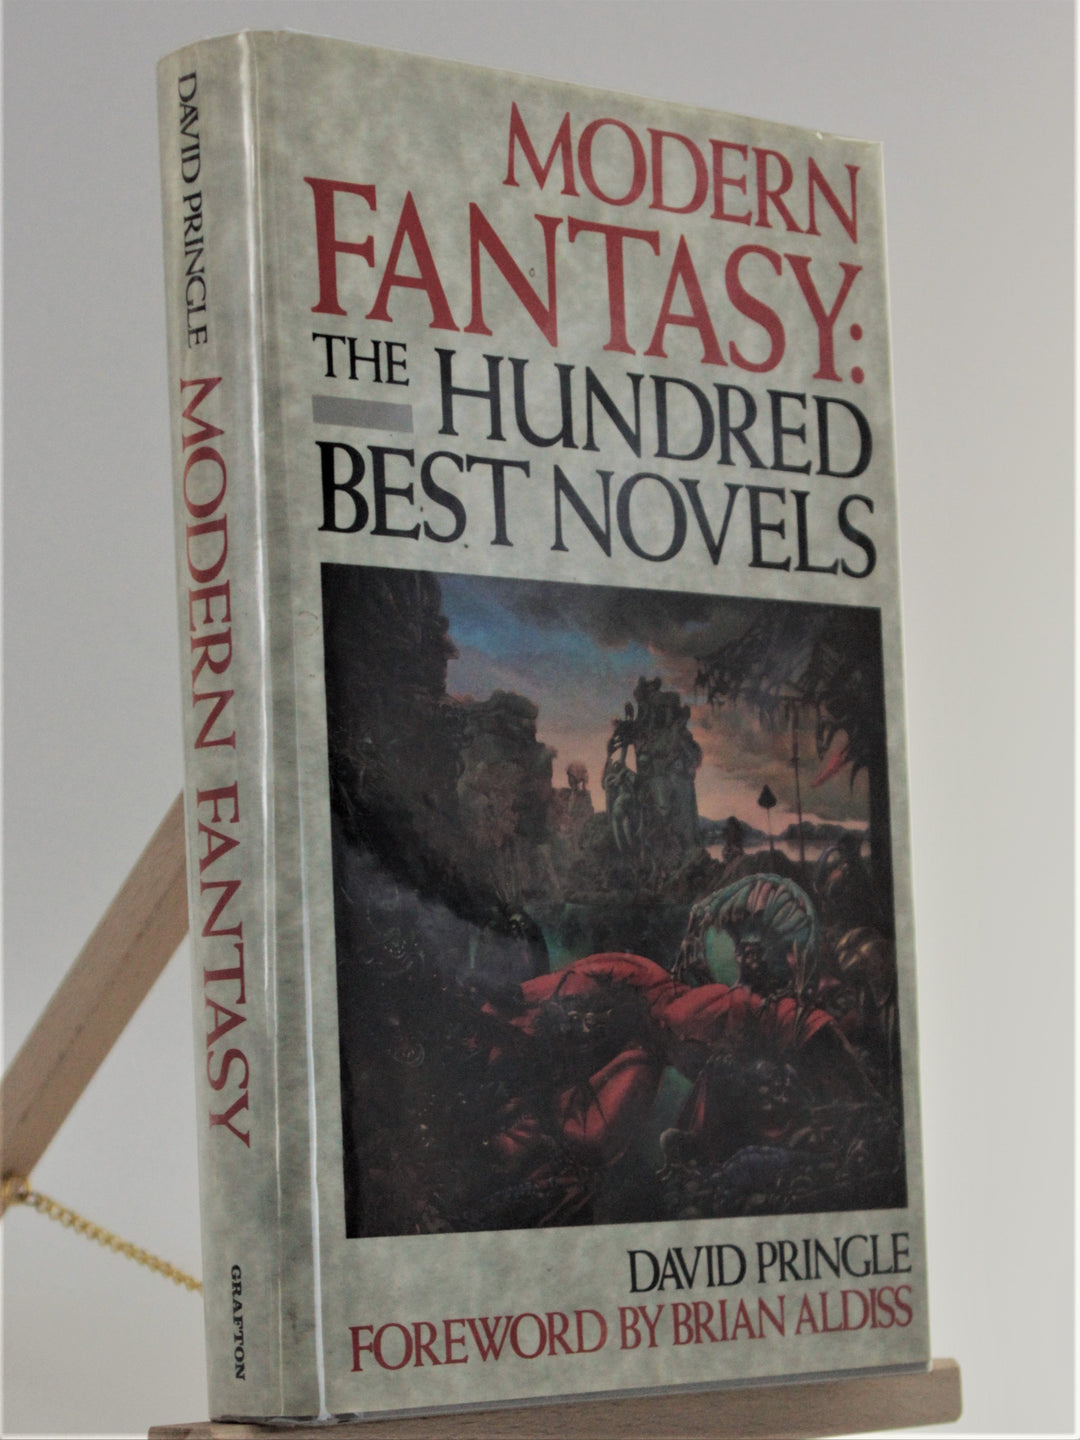 Pringle, David - Modern Fantasy : The Hundred Best Novels | back cover